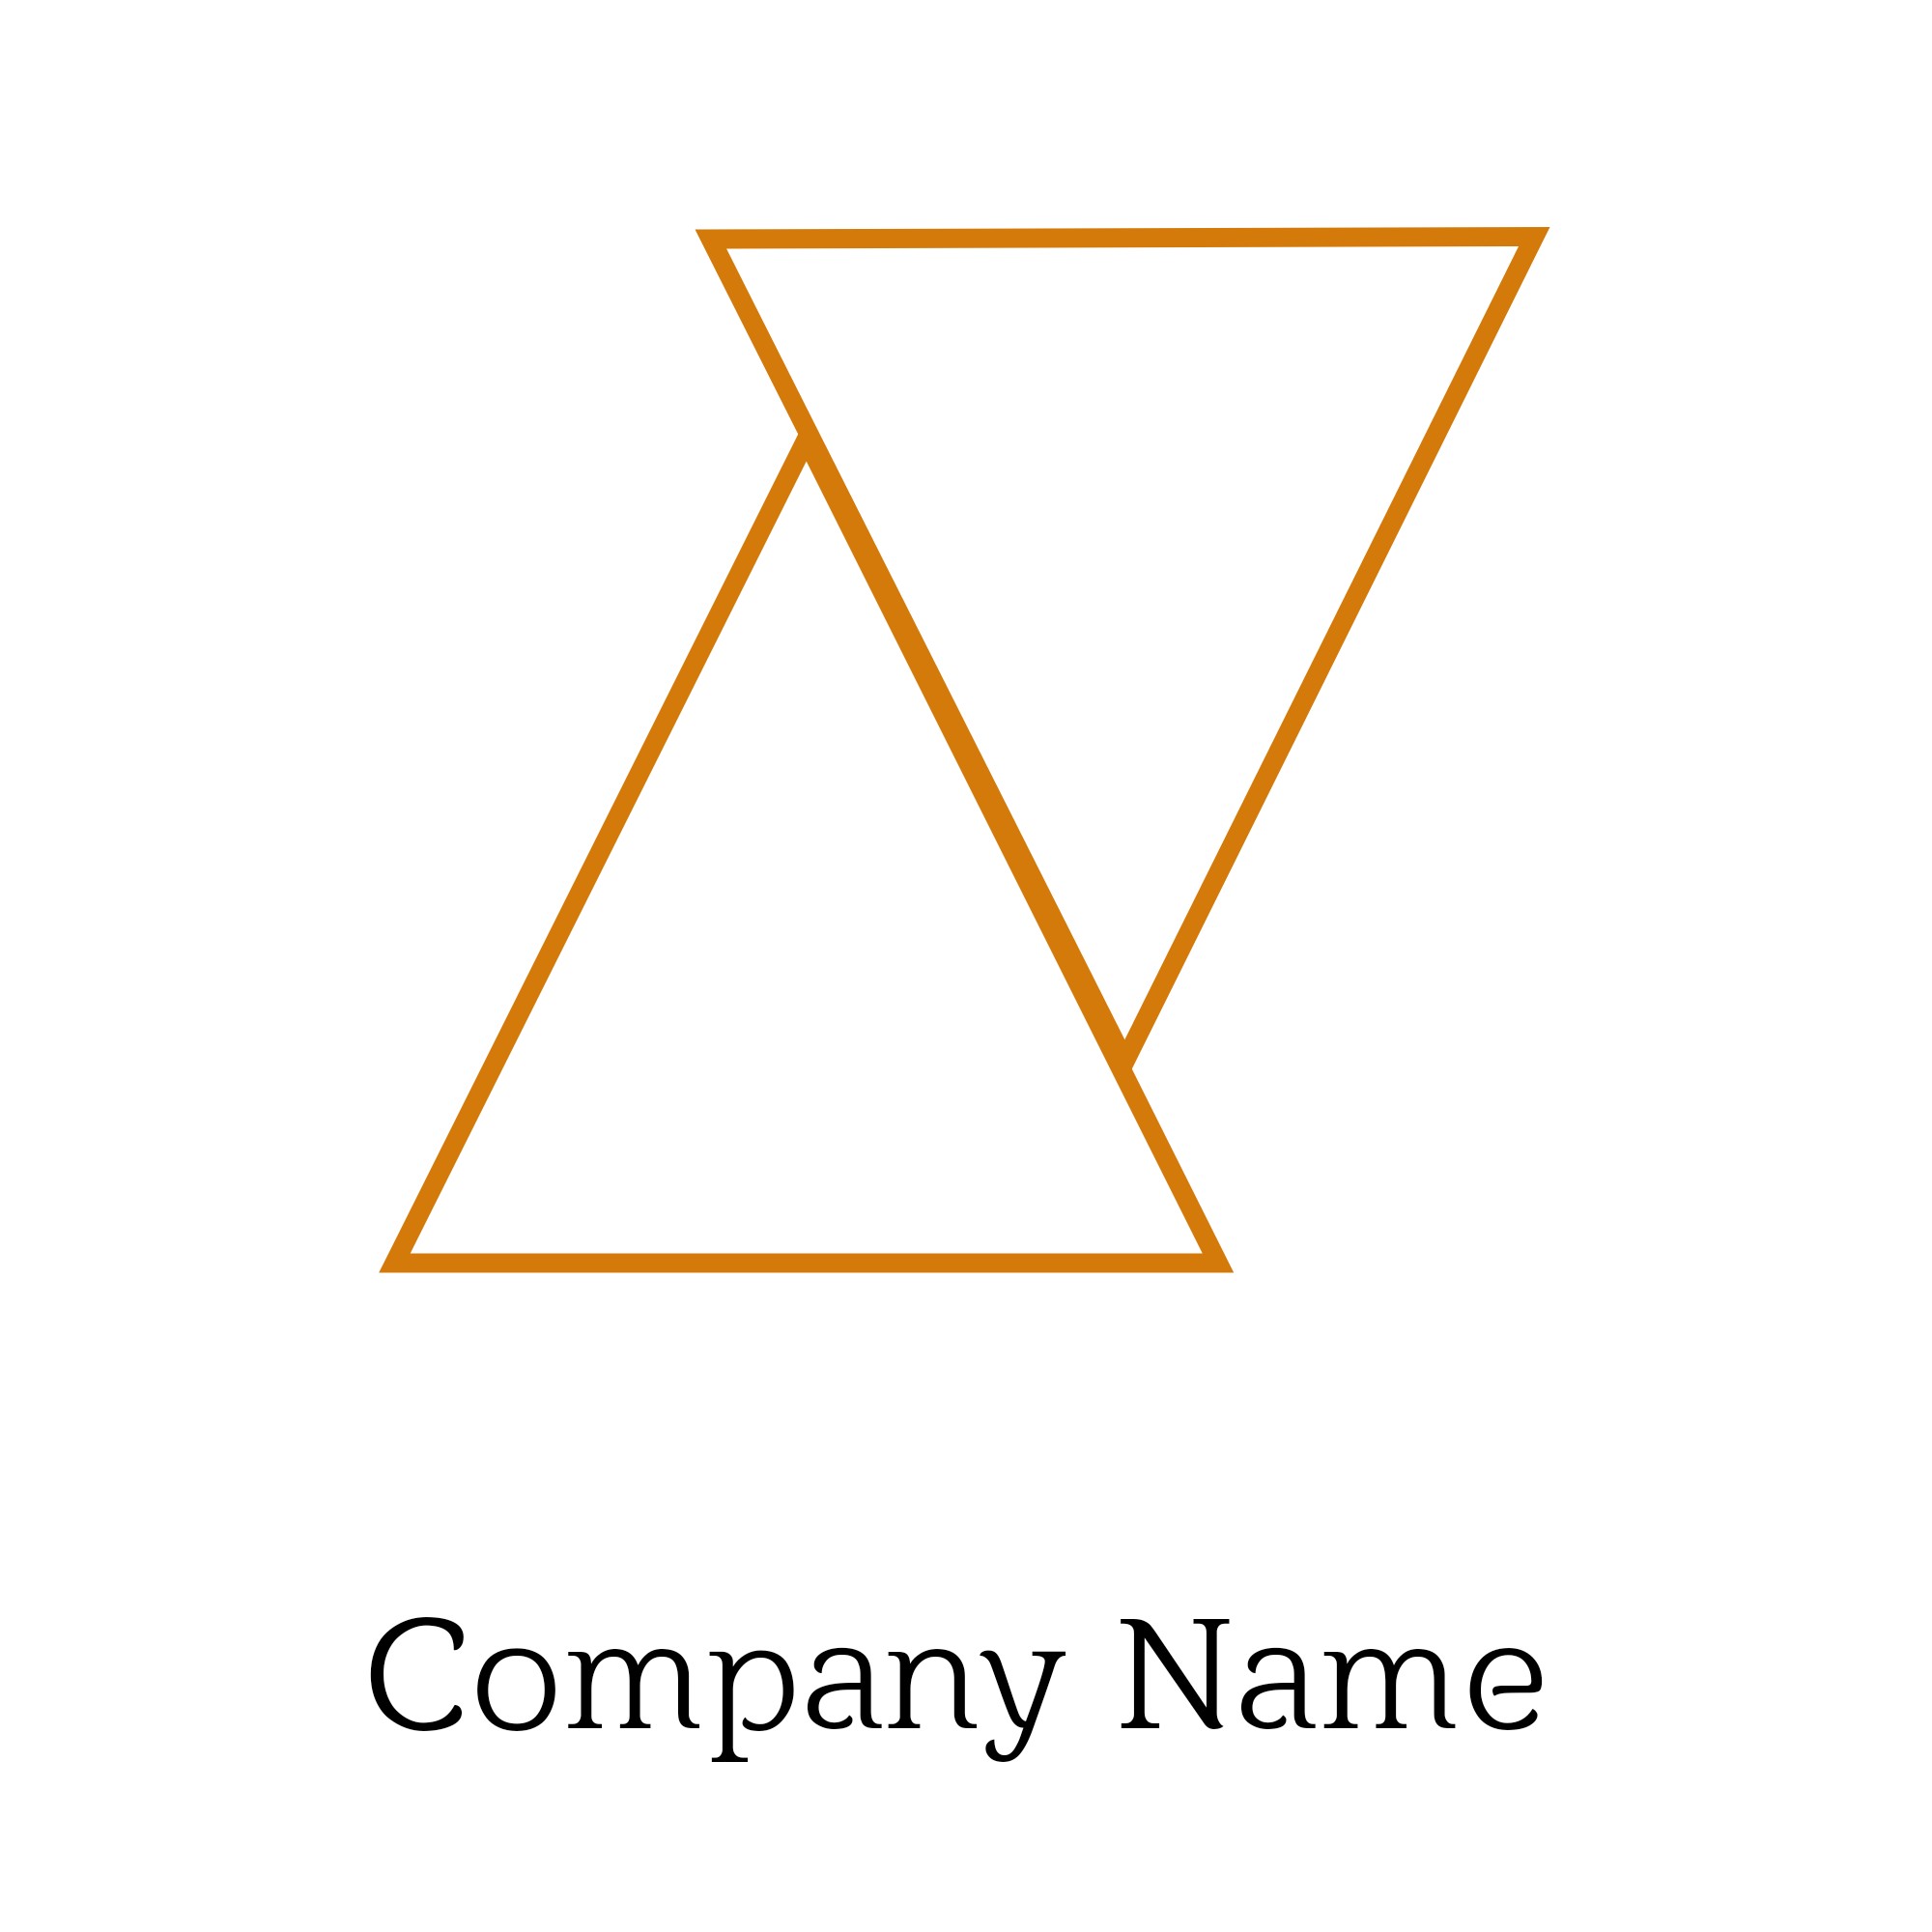 Logo for a business company